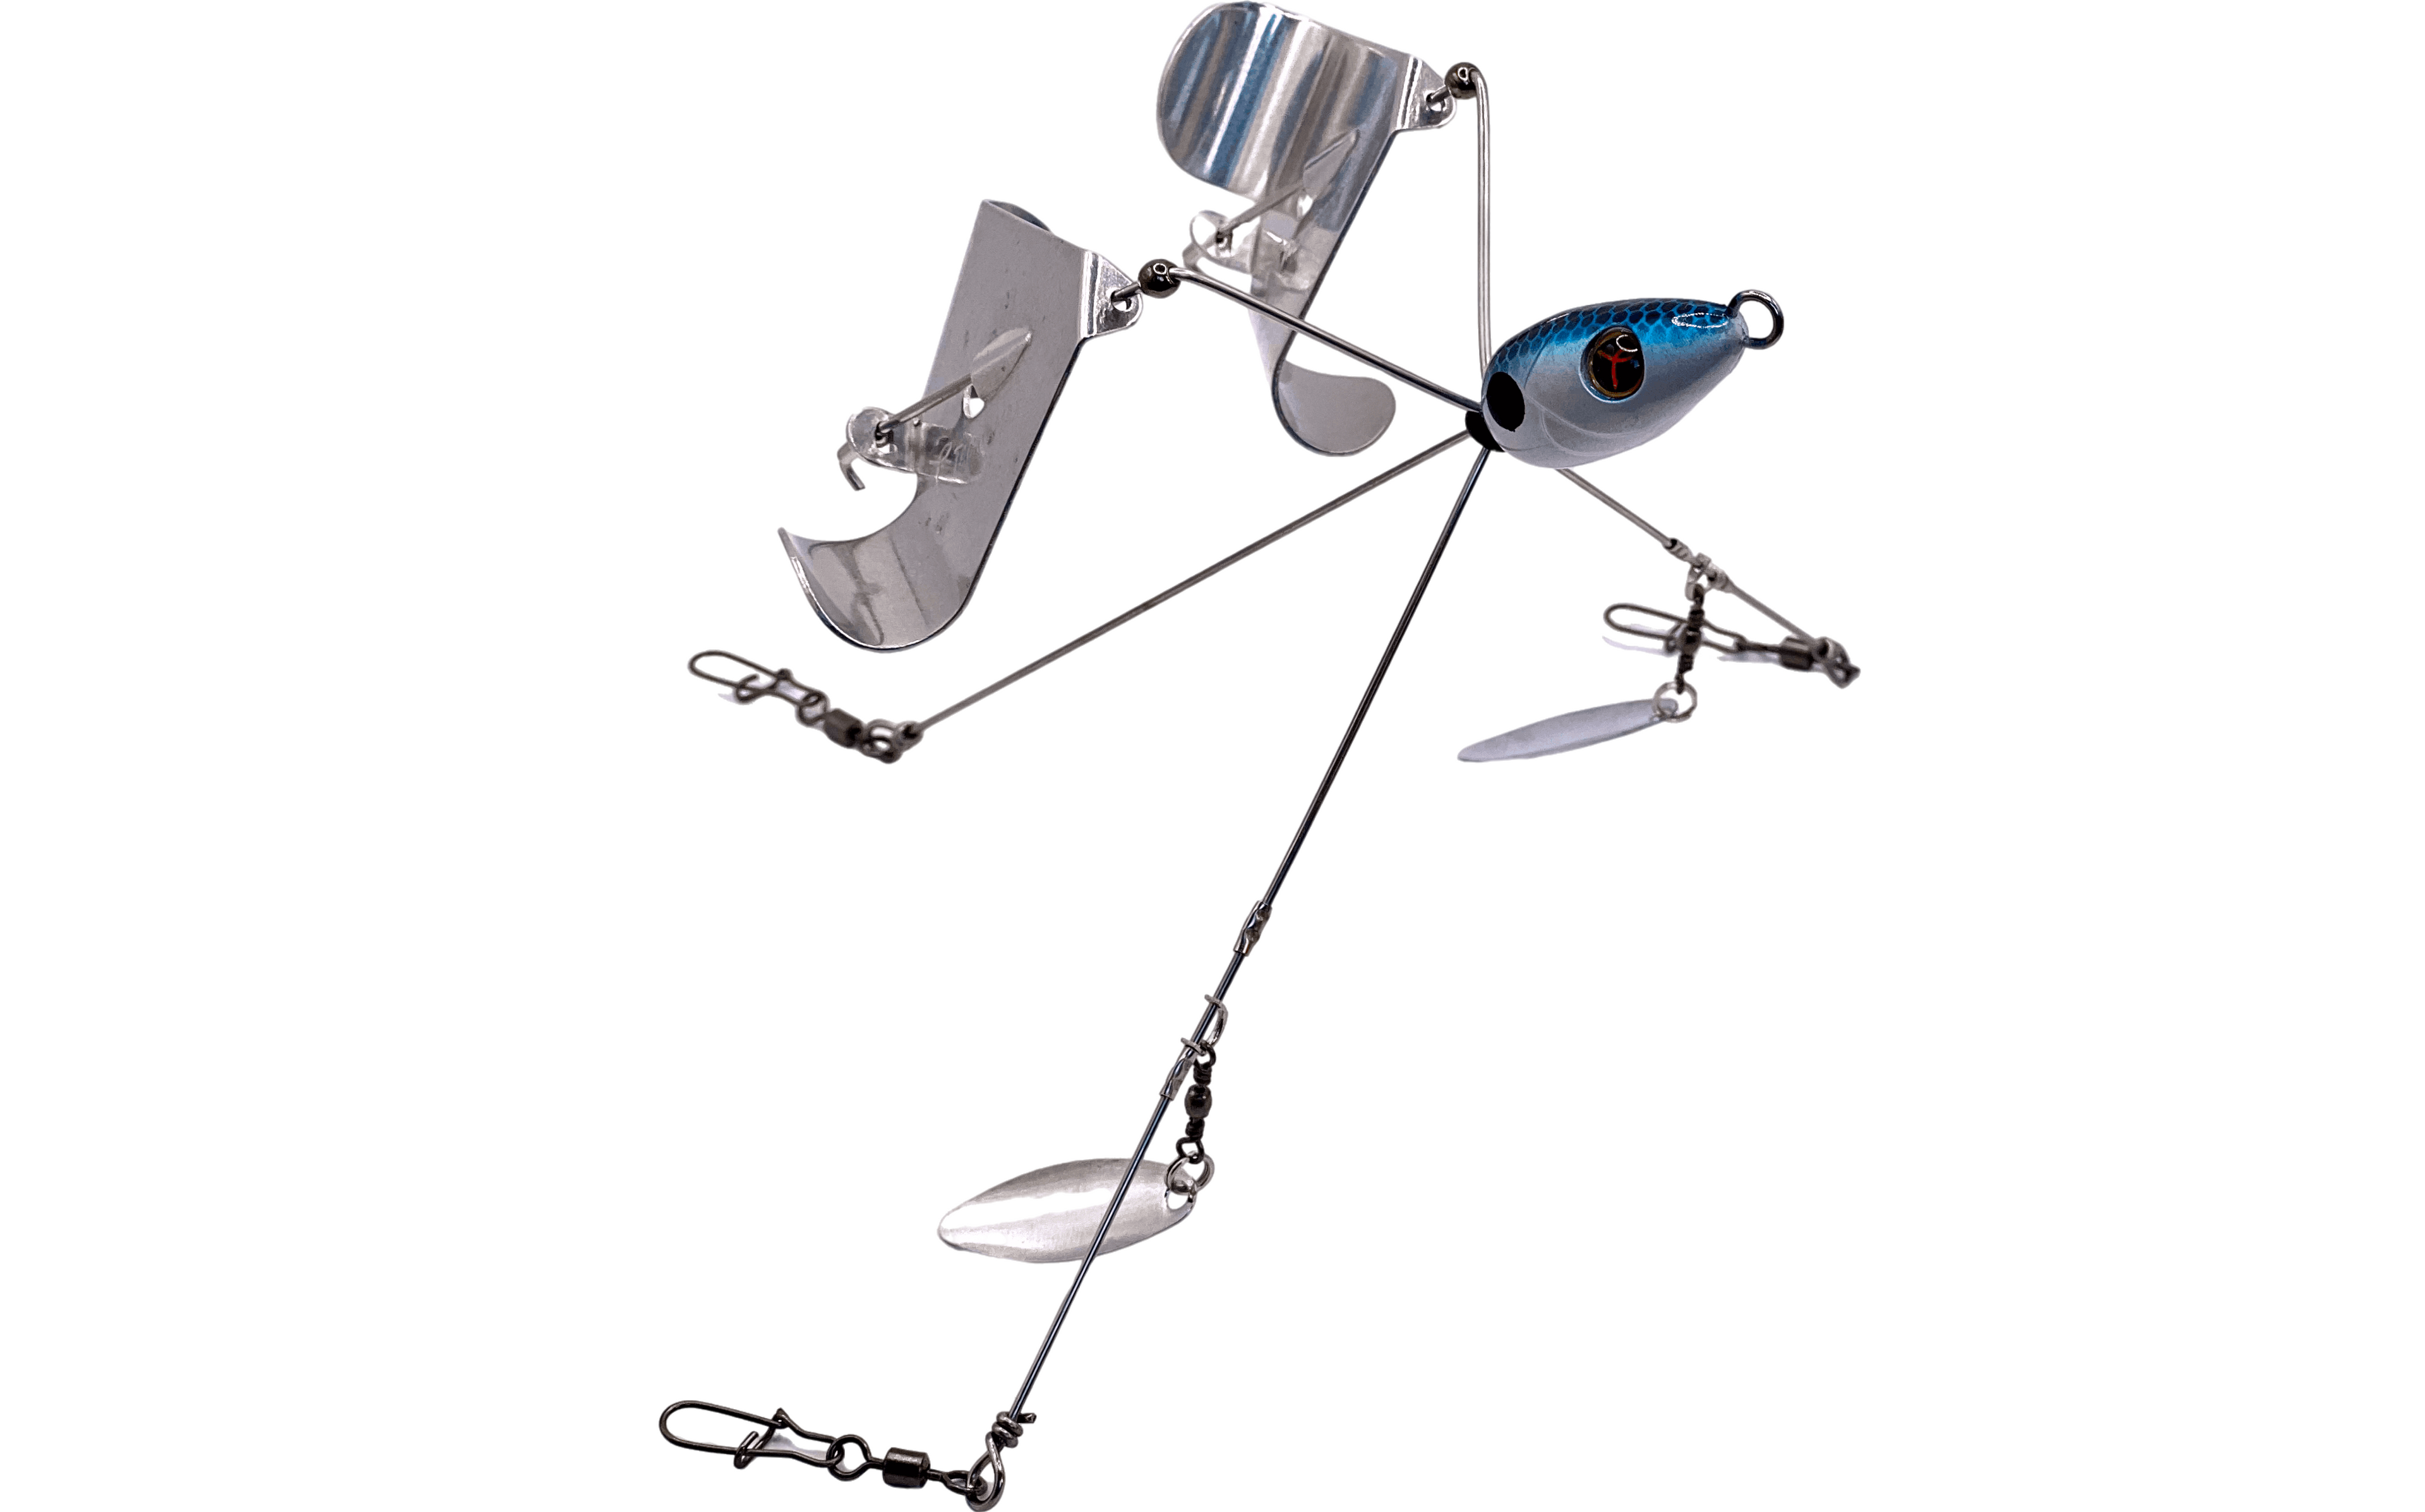 Lym Tackle – Affordable Fishing Tackle